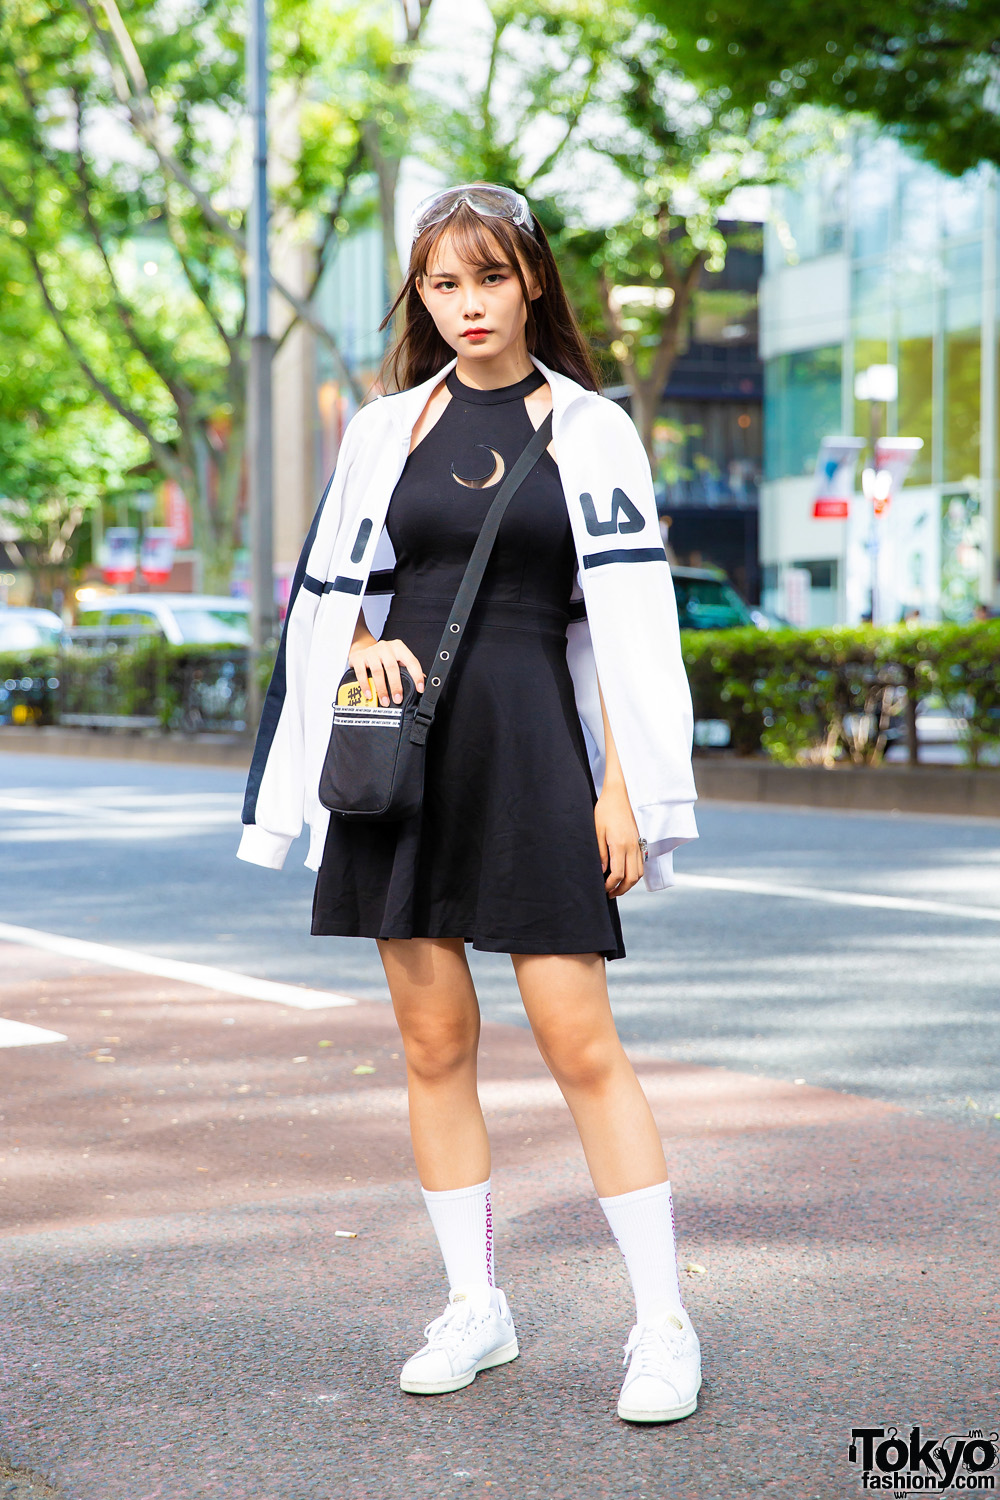 Harajuku Girl in Sporty Chic Streetwear Style